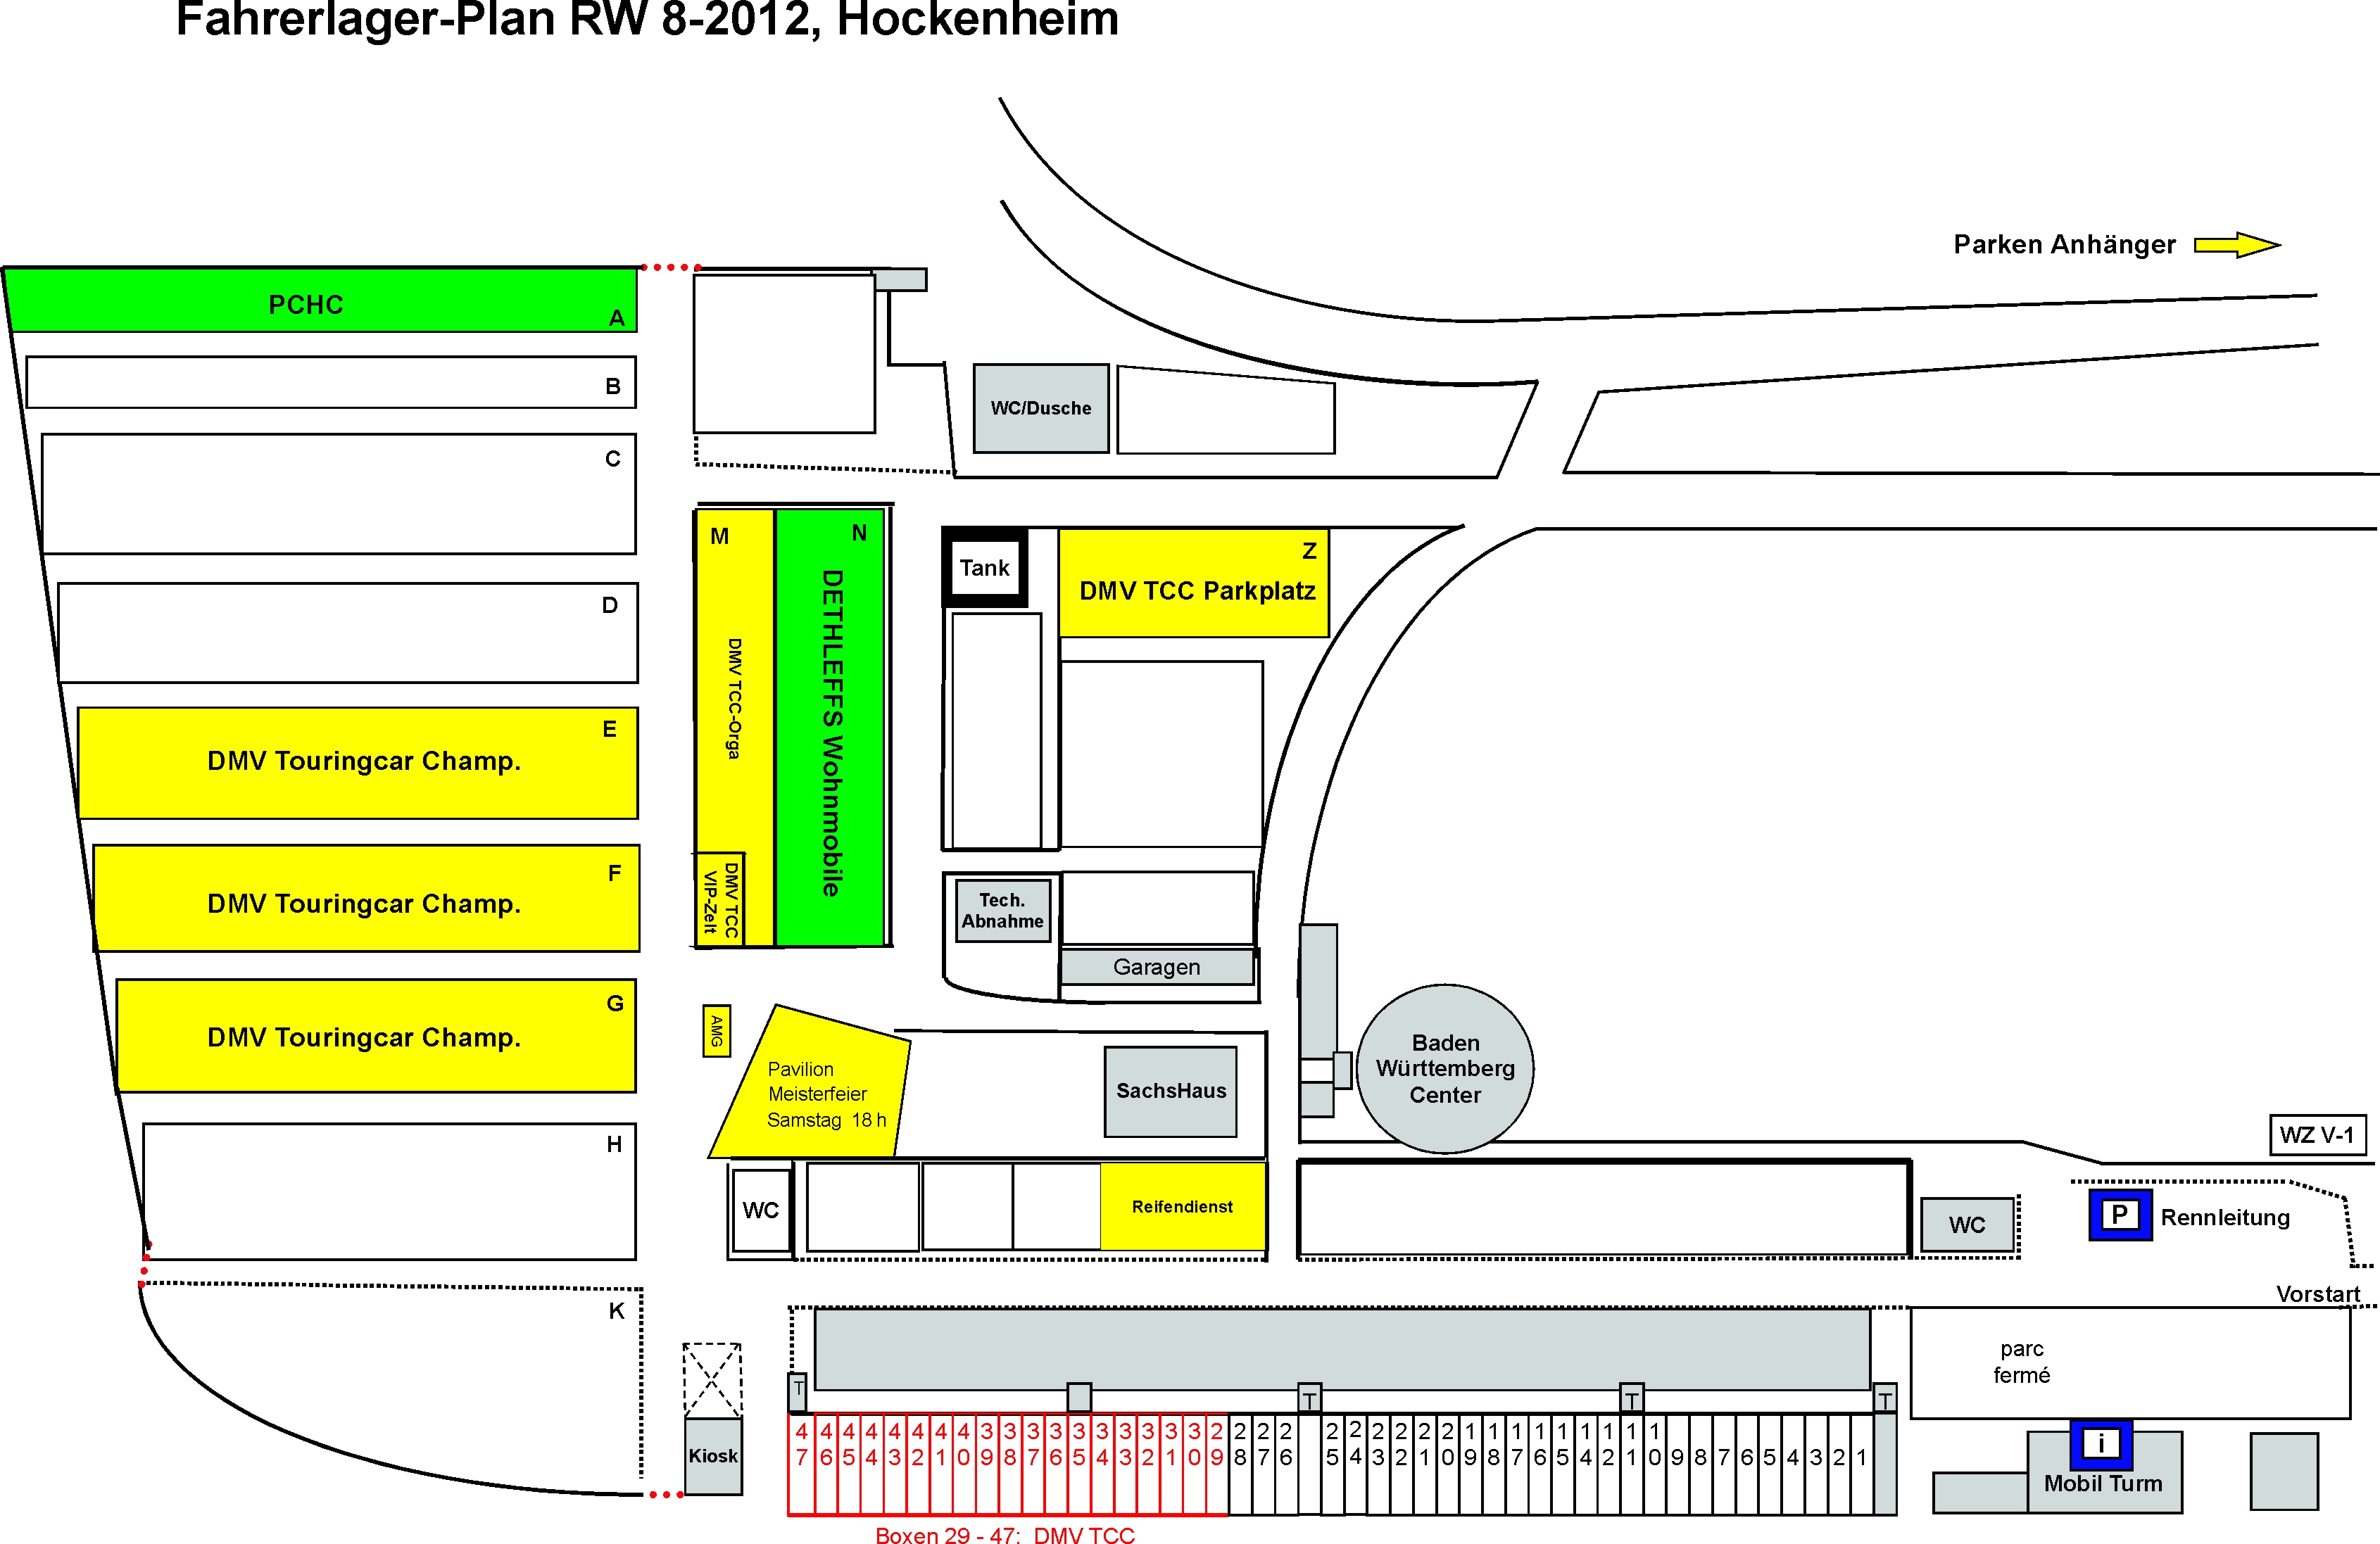  - Fahrerlagerplan Hockenheim R8_2012_Version_09.10.2012